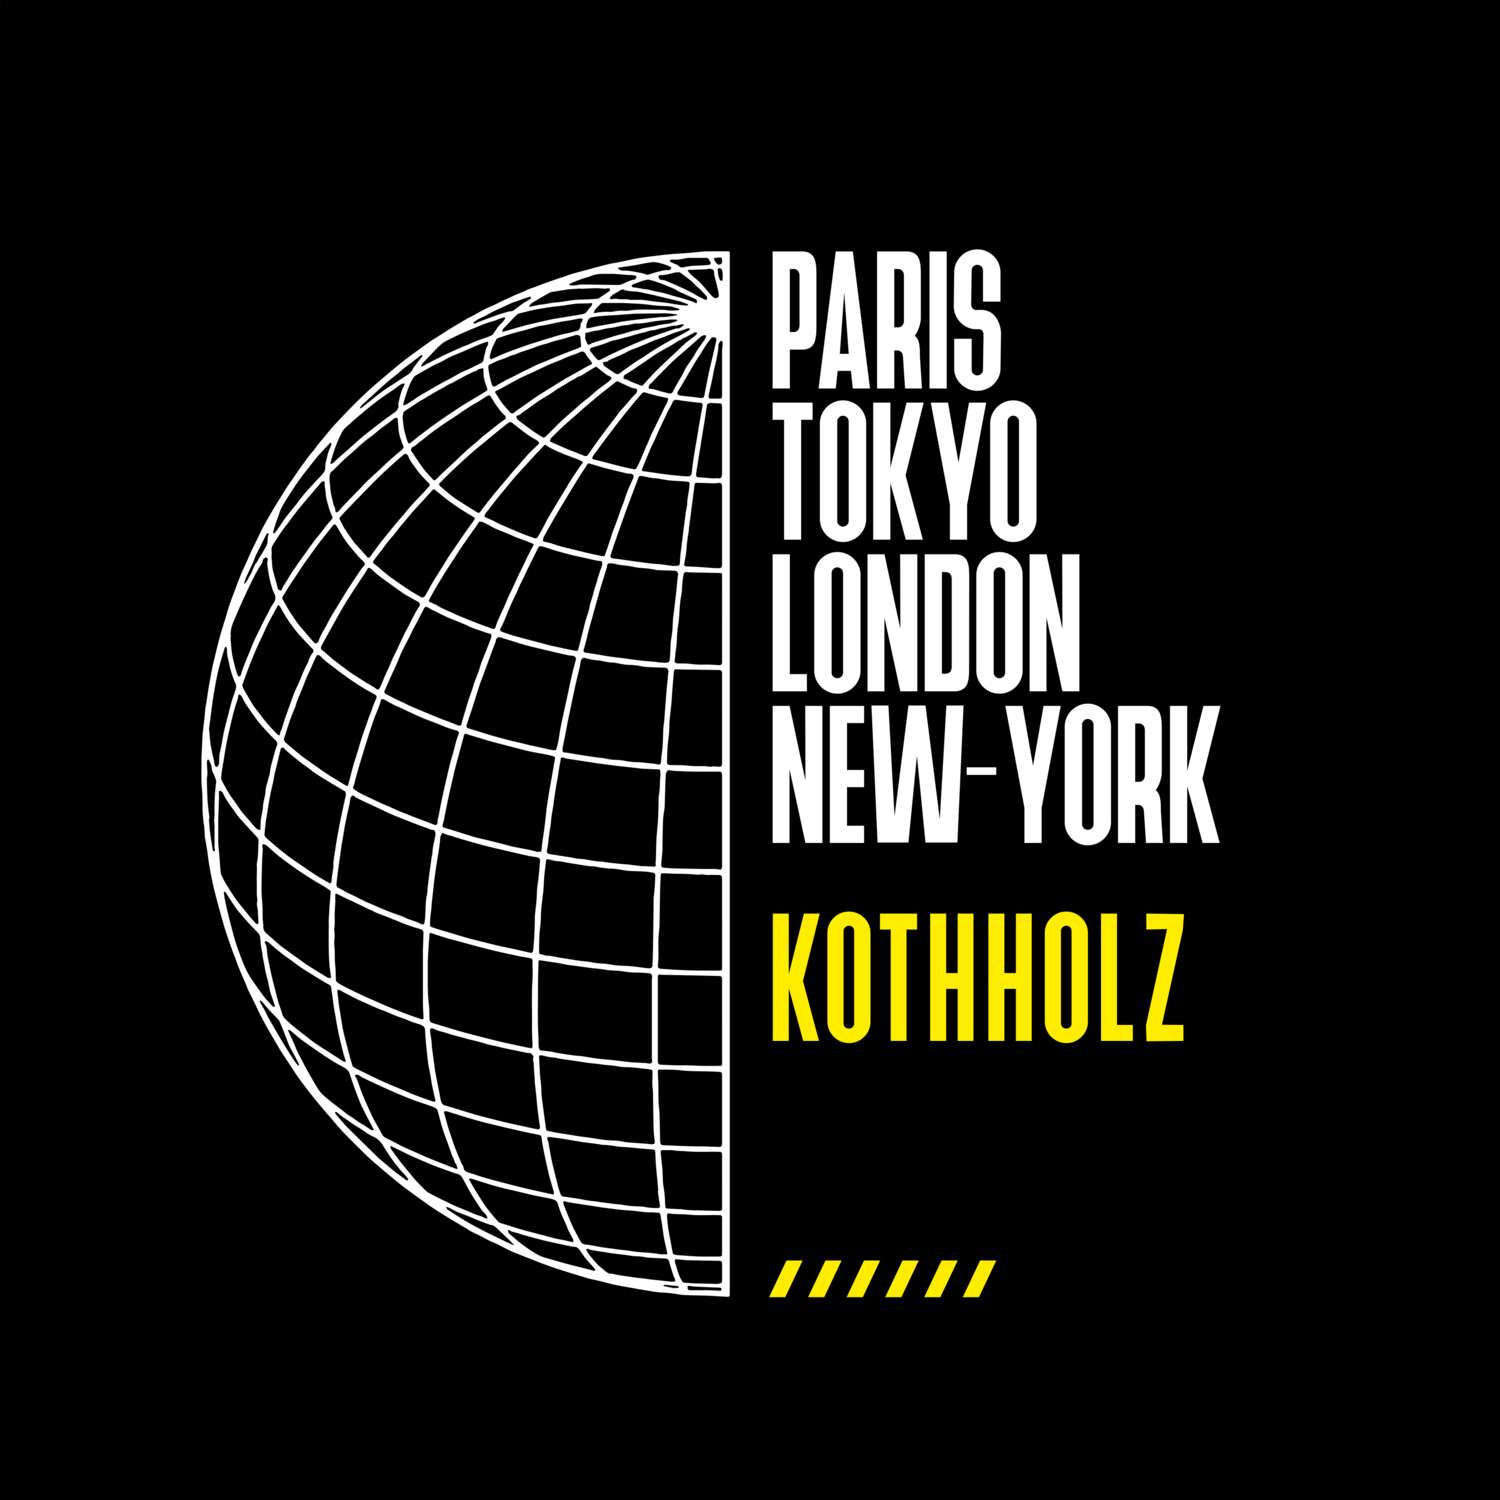 Kothholz T-Shirt »Paris Tokyo London«